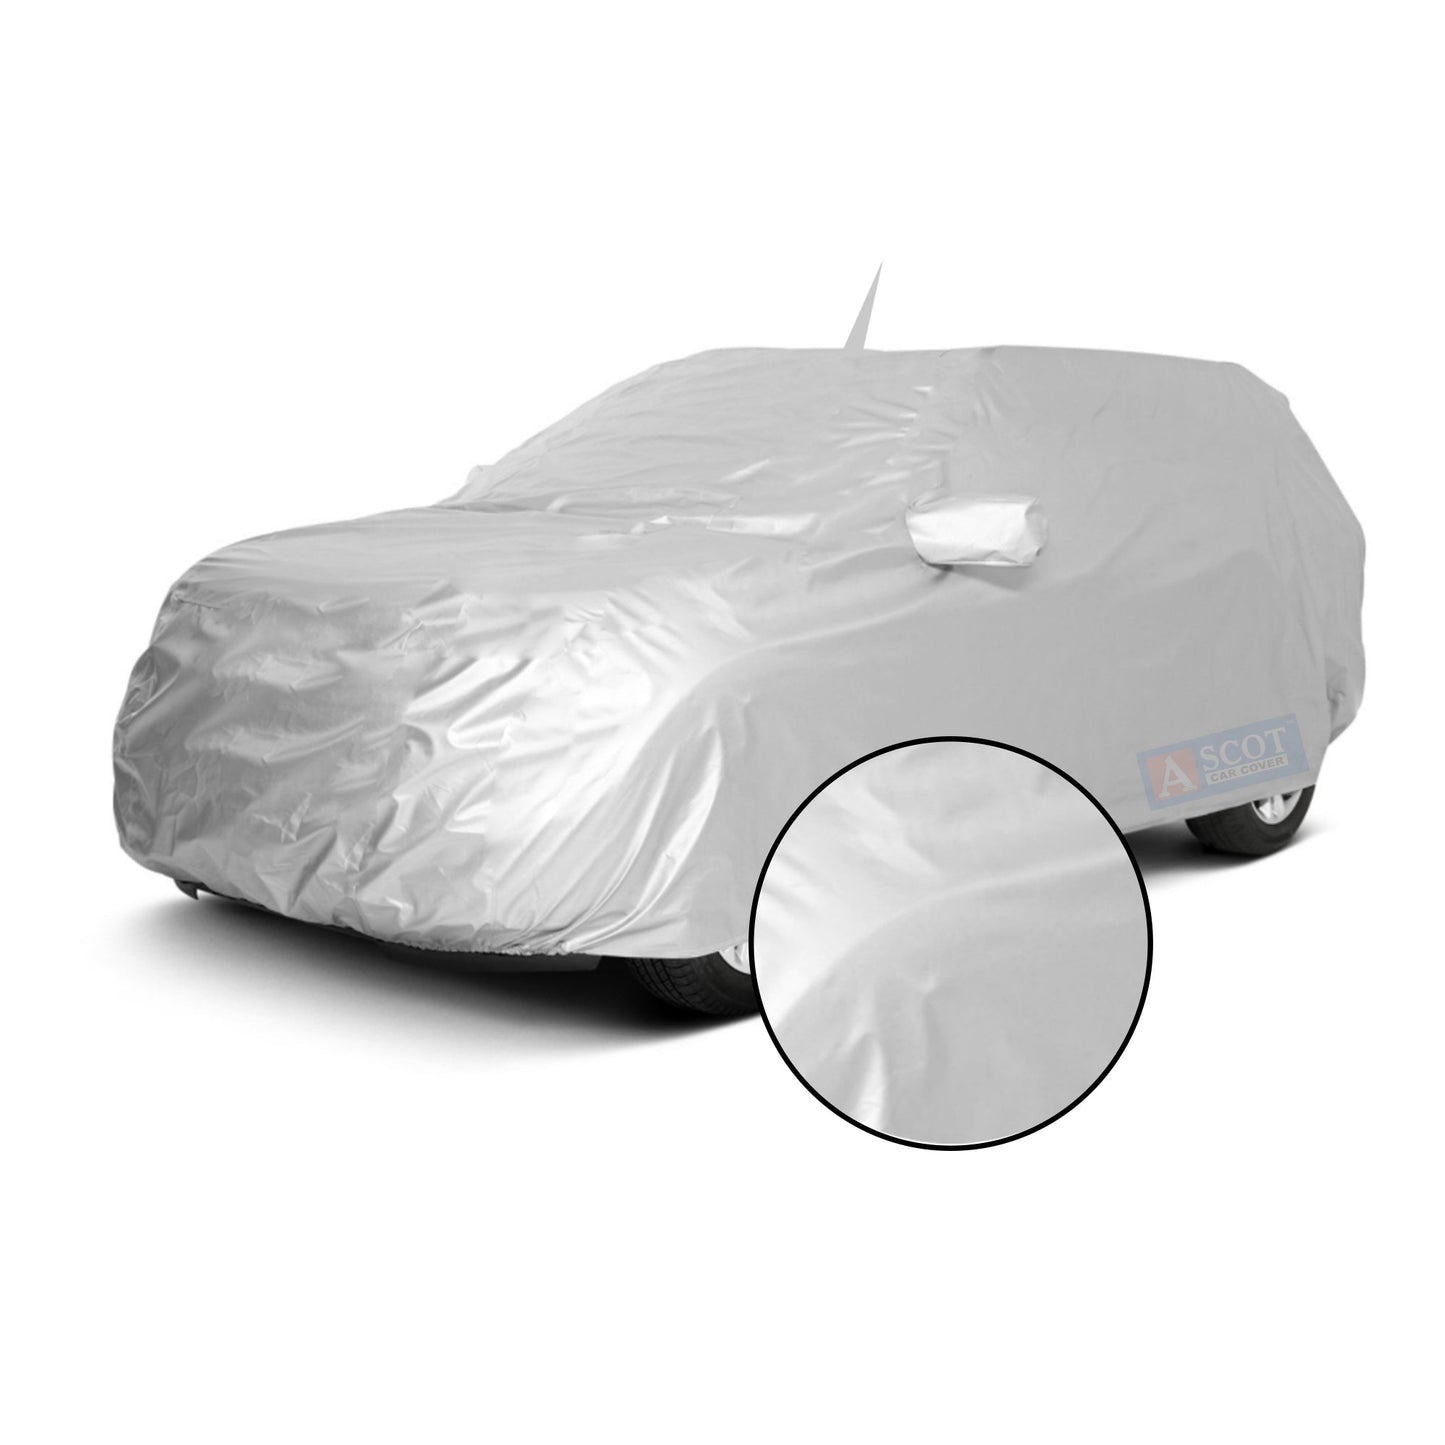 Ascot Tata Nexon / Nexon Facelift Car Body Cover Dust Proof, Trippel Stitched